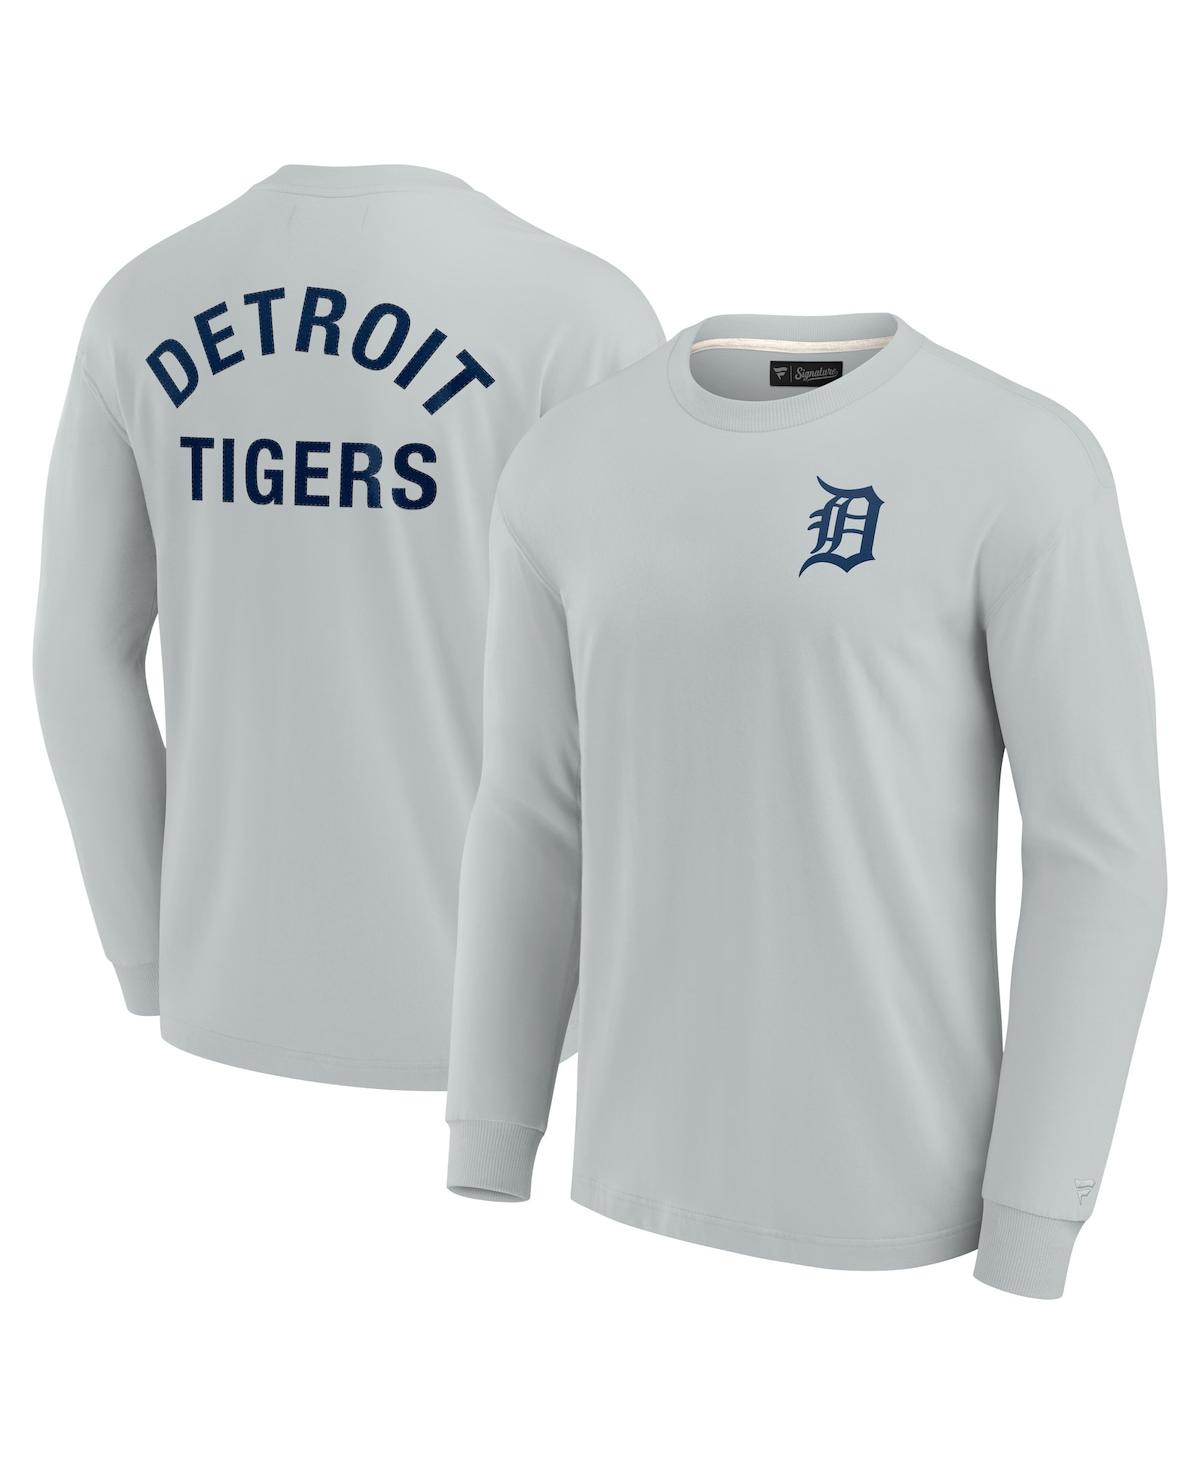 Shop Fanatics Signature Men's And Women's  Gray Detroit Tigers Super Soft Long Sleeve T-shirt